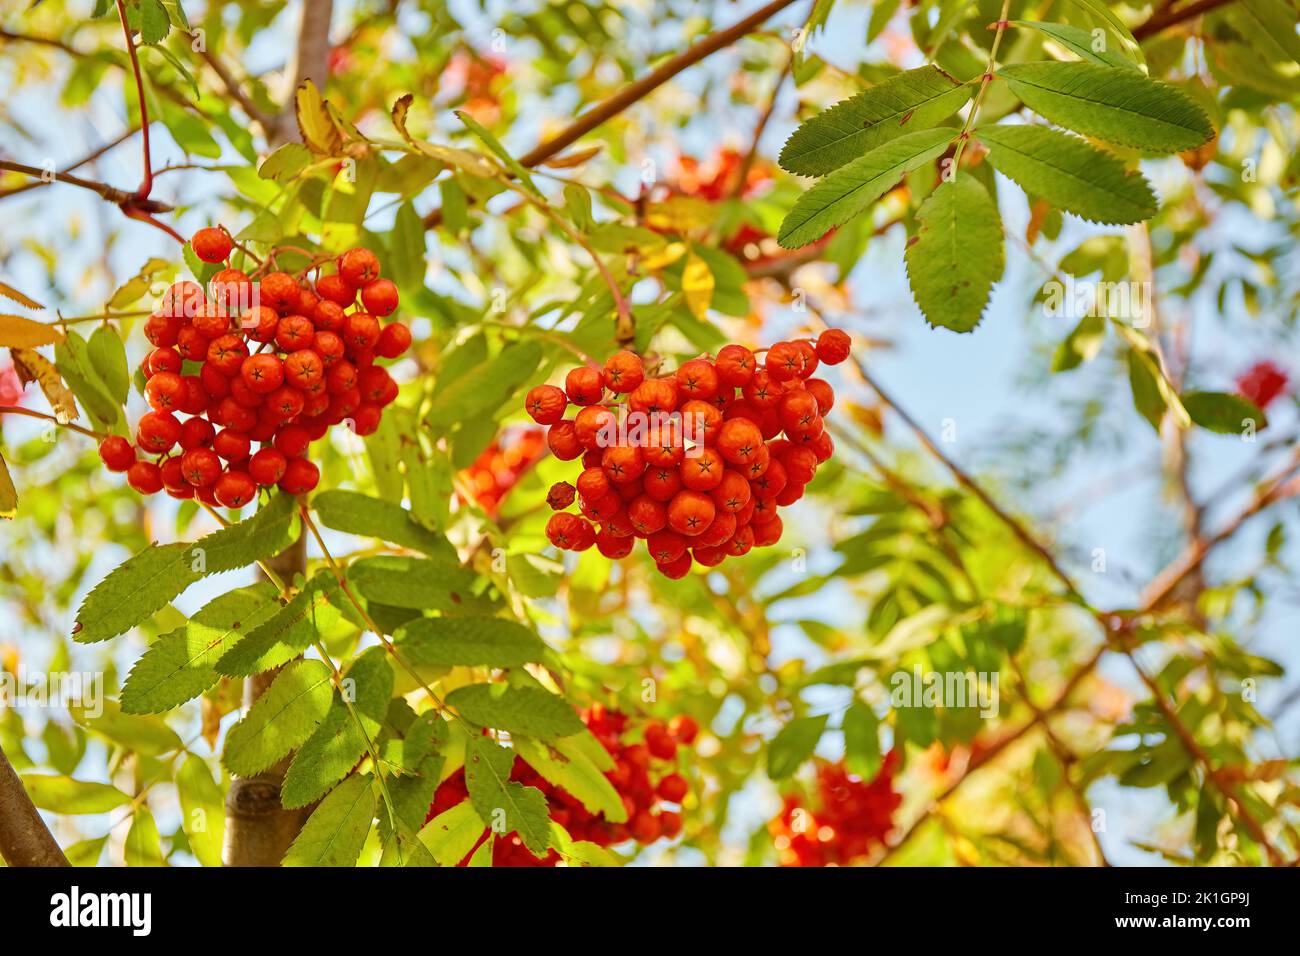 Autumn season. Fall harvest concept. Autumn rowan berries on branch. Amazing benefits of rowan berries. Rowan berries sour but rich vitamin C. Red ber Stock Photo